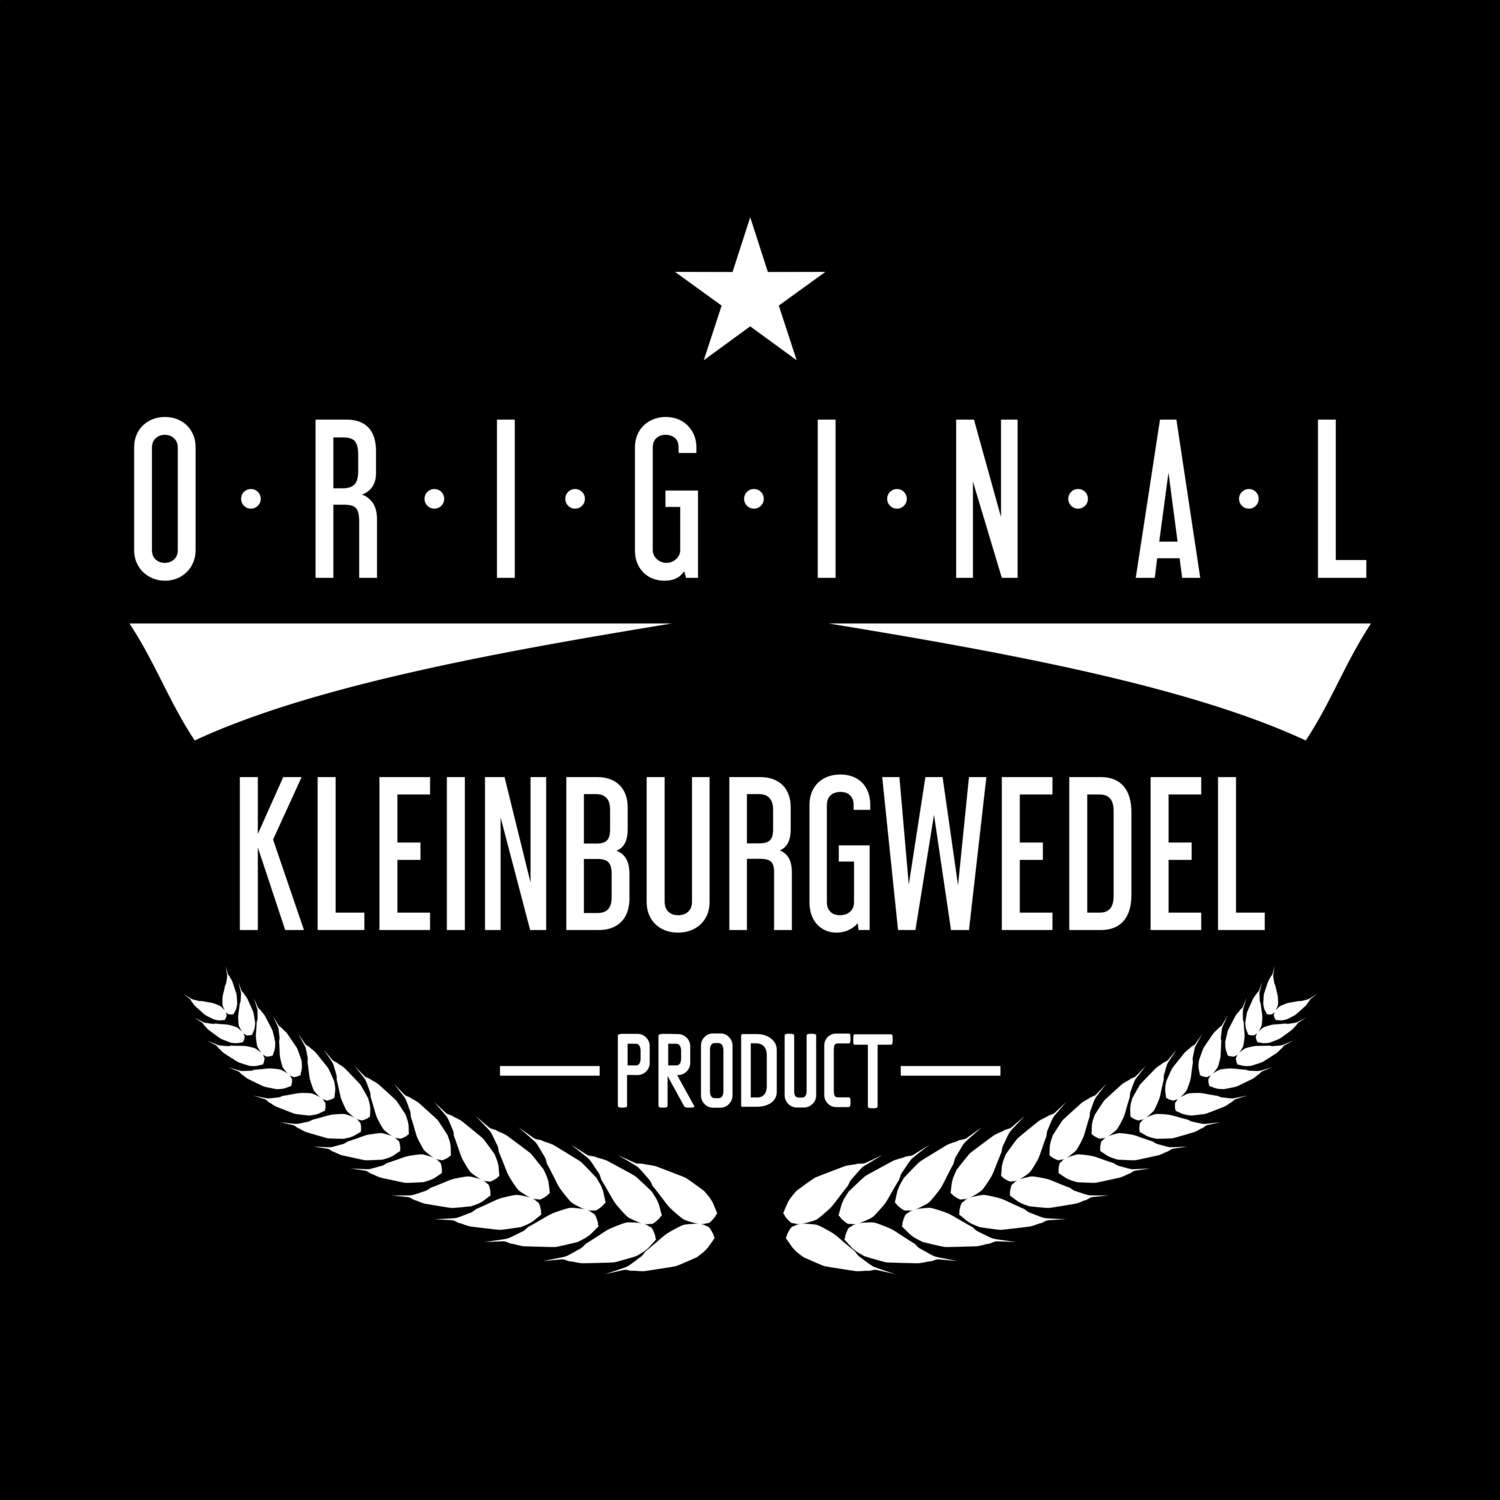 Kleinburgwedel T-Shirt »Original Product«